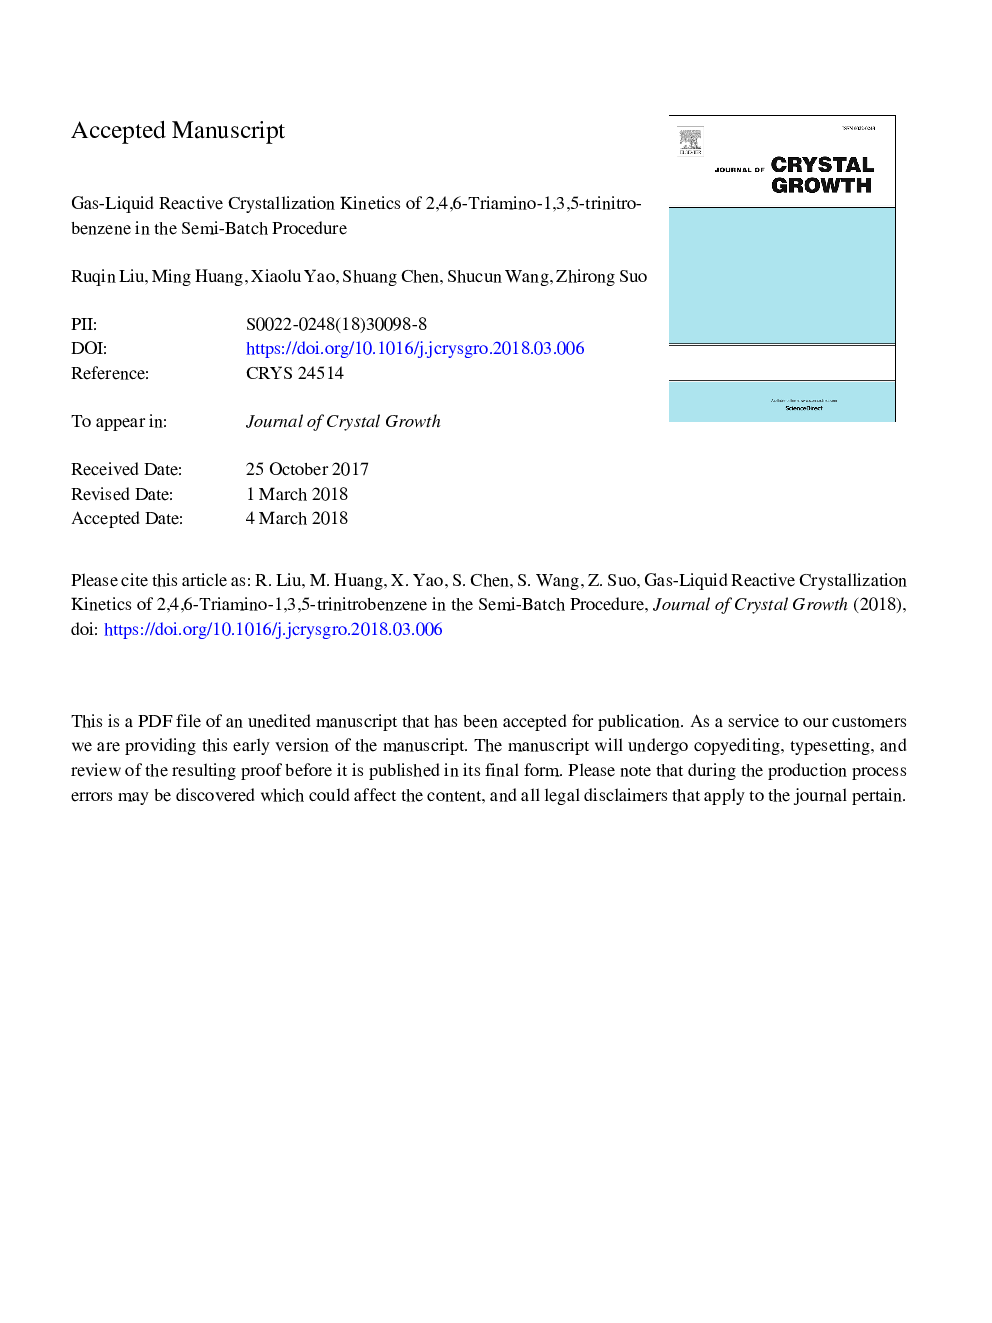 Gas-liquid reactive crystallization kinetics of 2,4,6-triamino-1,3,5-trinitrobenzene in the semi-batch procedure